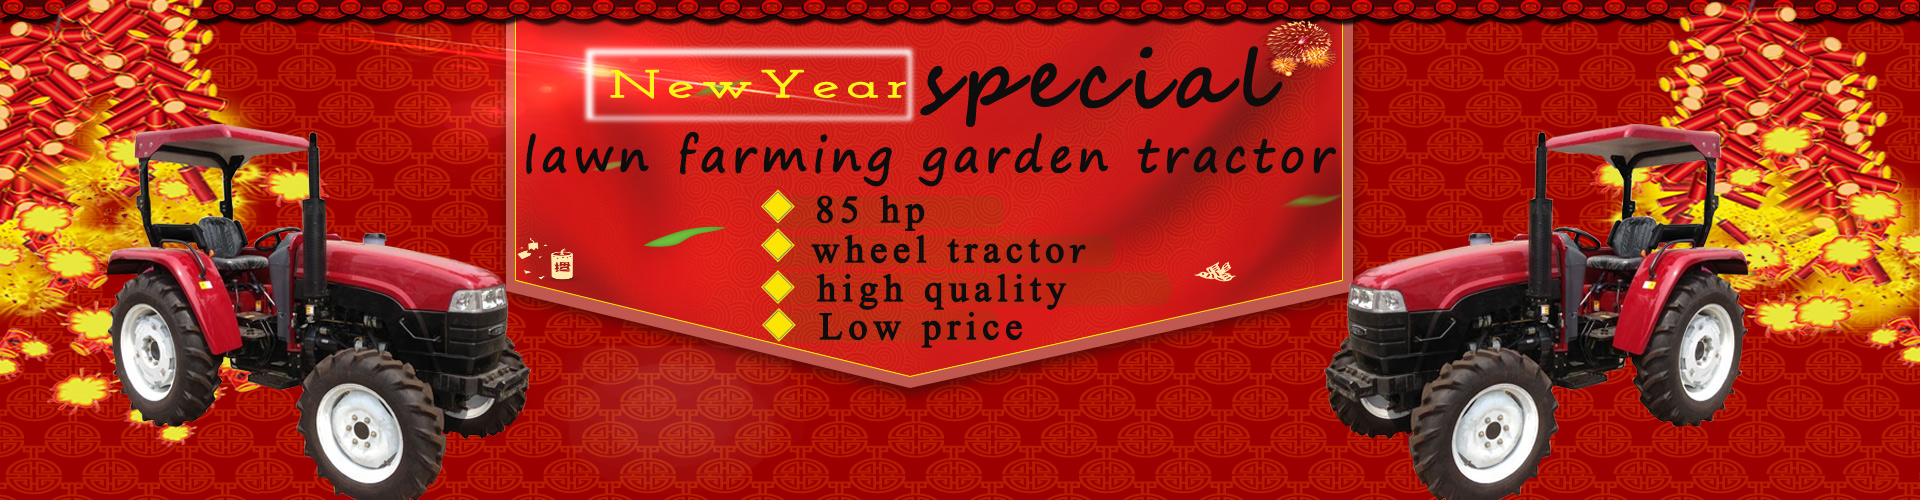  lawn farming garden tractor  85hp